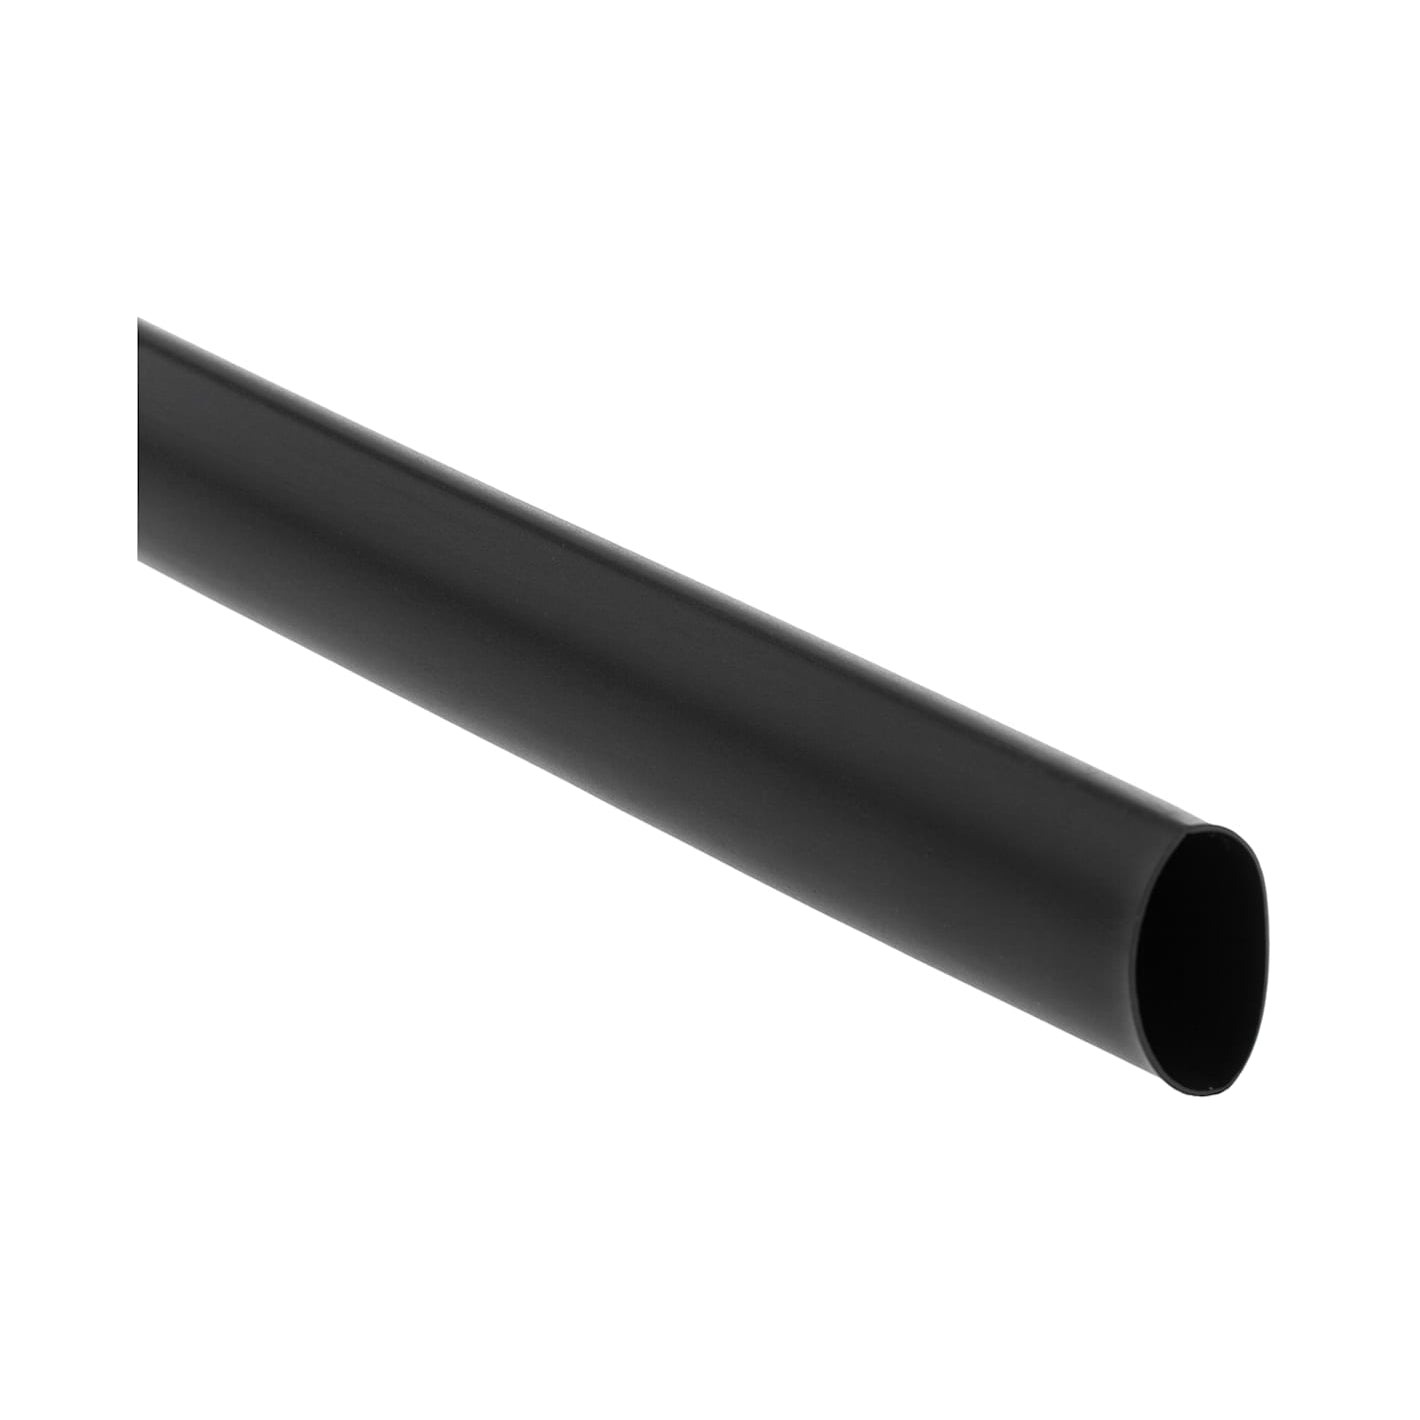 Heat Shrink Tubing 2:1 p/meter »-3D-𝐼⌀3.2𝑚𝑚-Black-diyshop.co.za